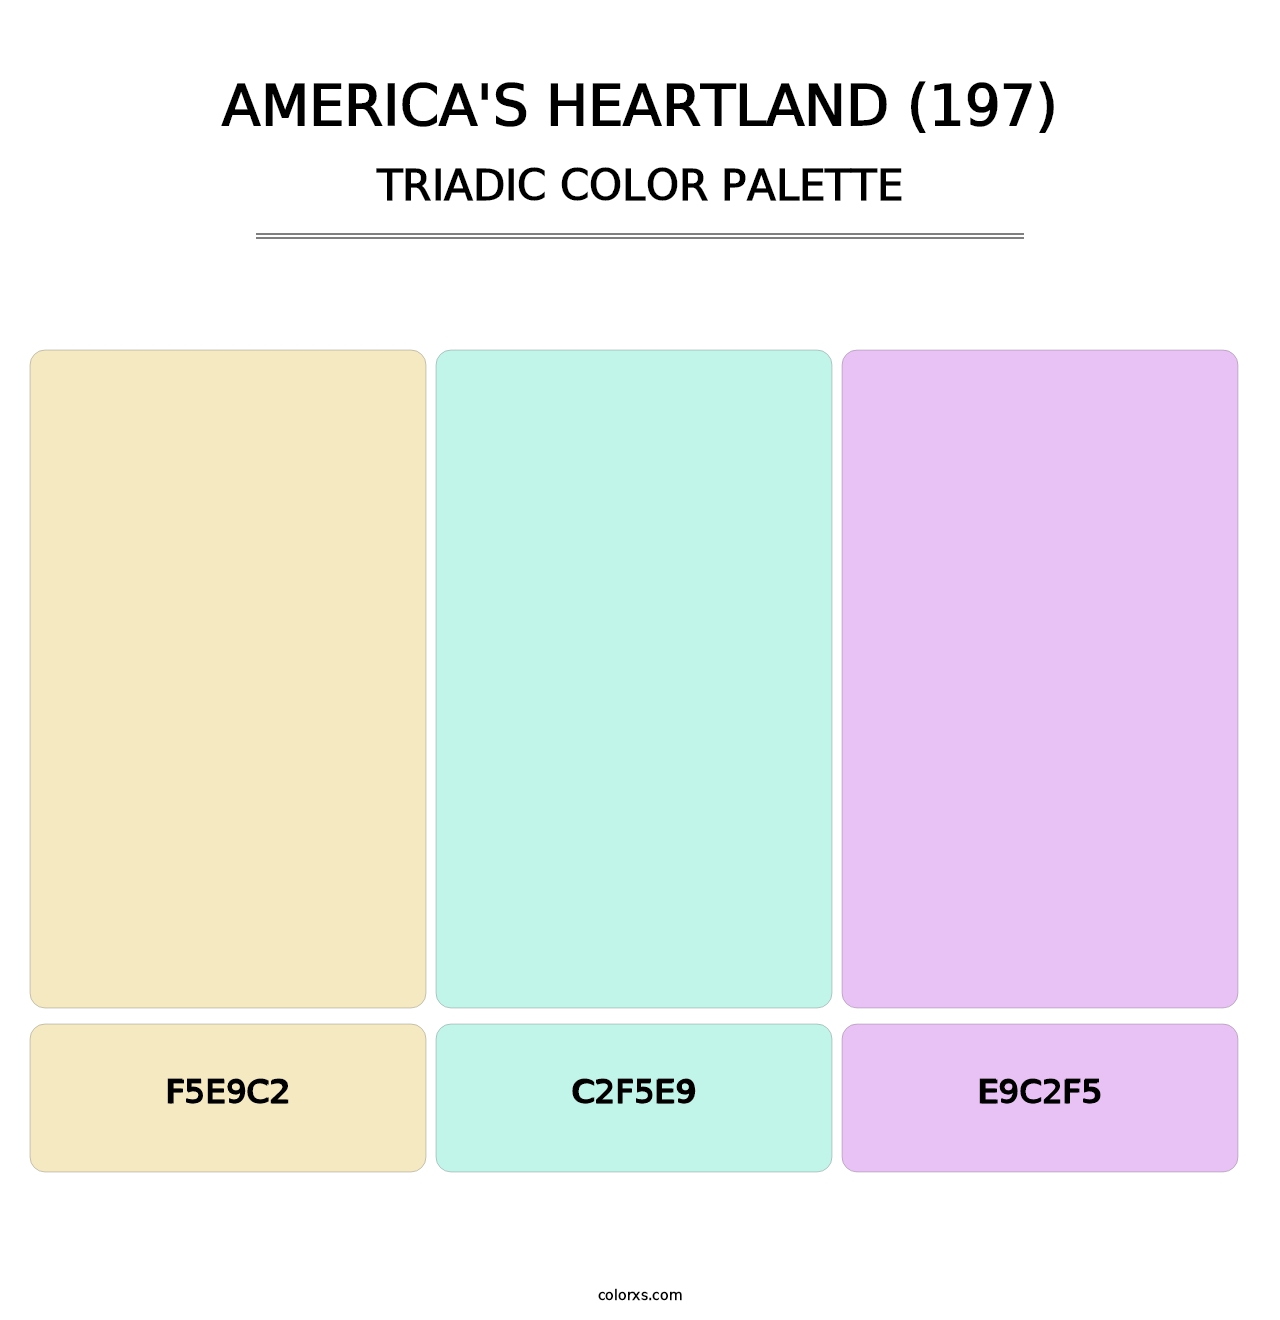 America's Heartland (197) - Triadic Color Palette